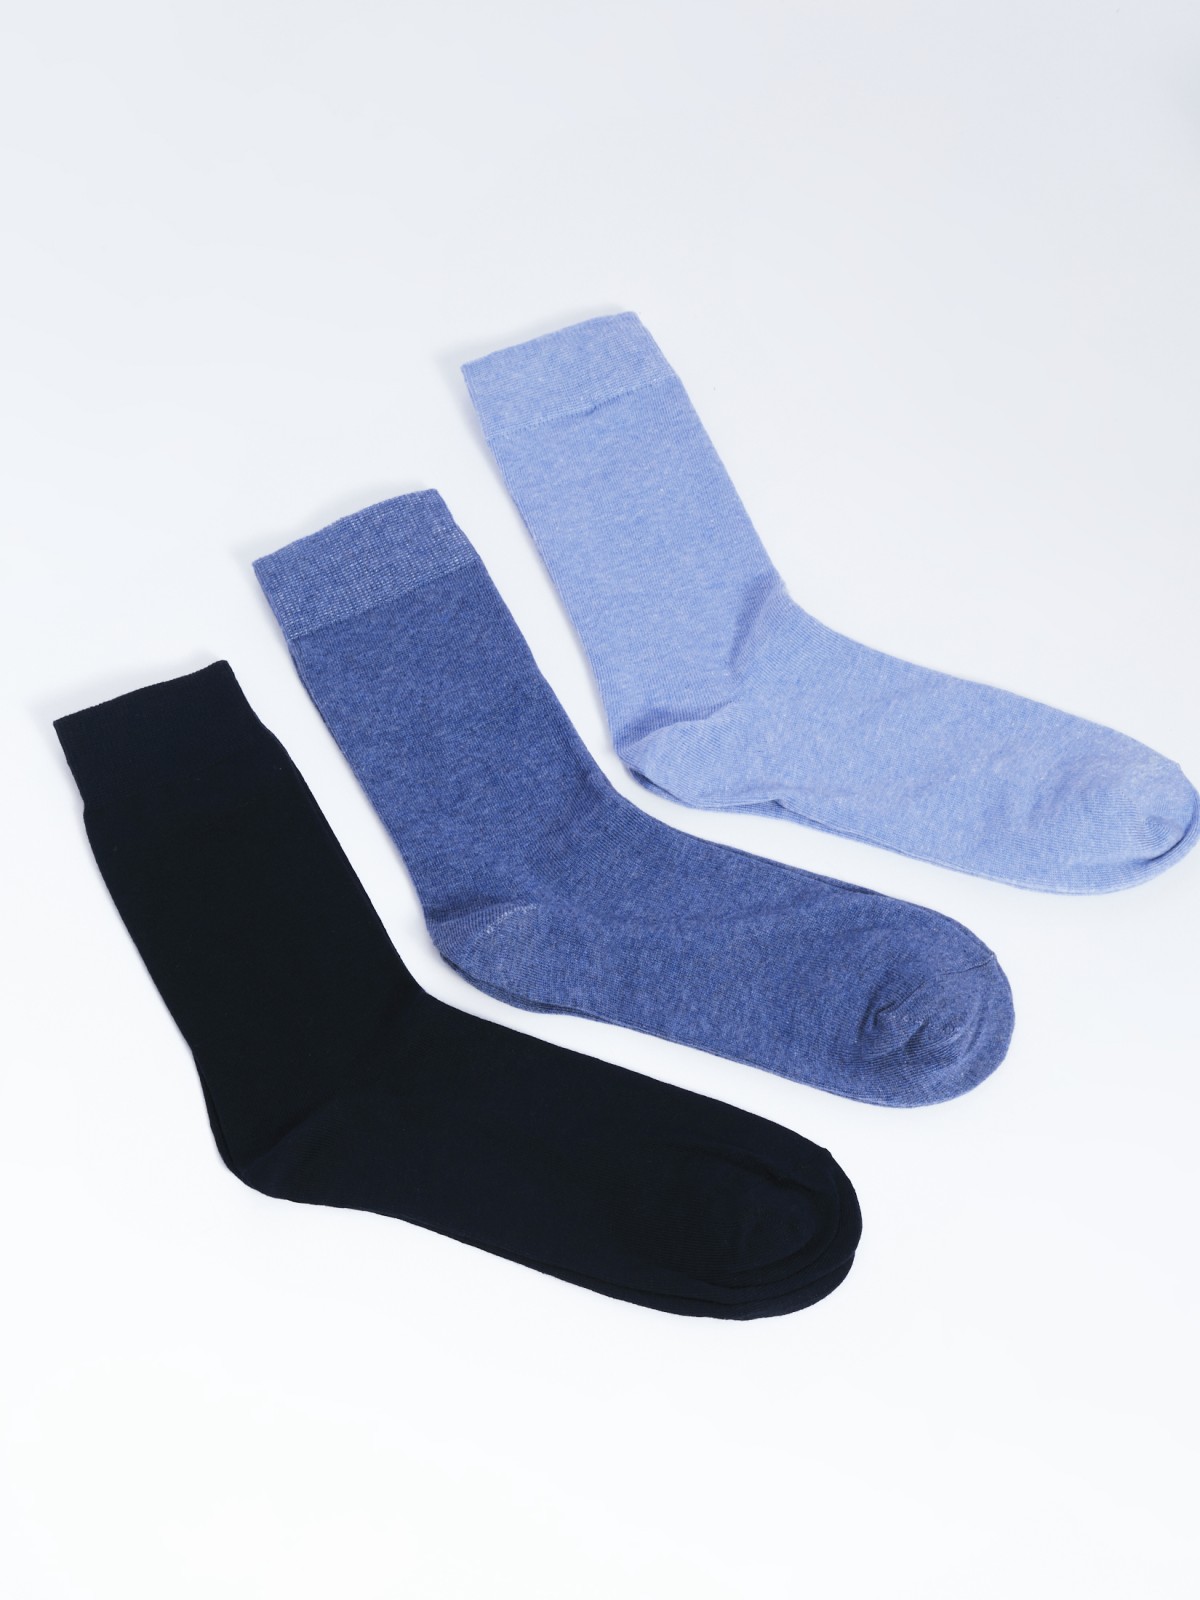 Набор носков (3 пары в комплекте) zolla 01331990Z025, цвет темно-синий, размер 25-27 - фото 1